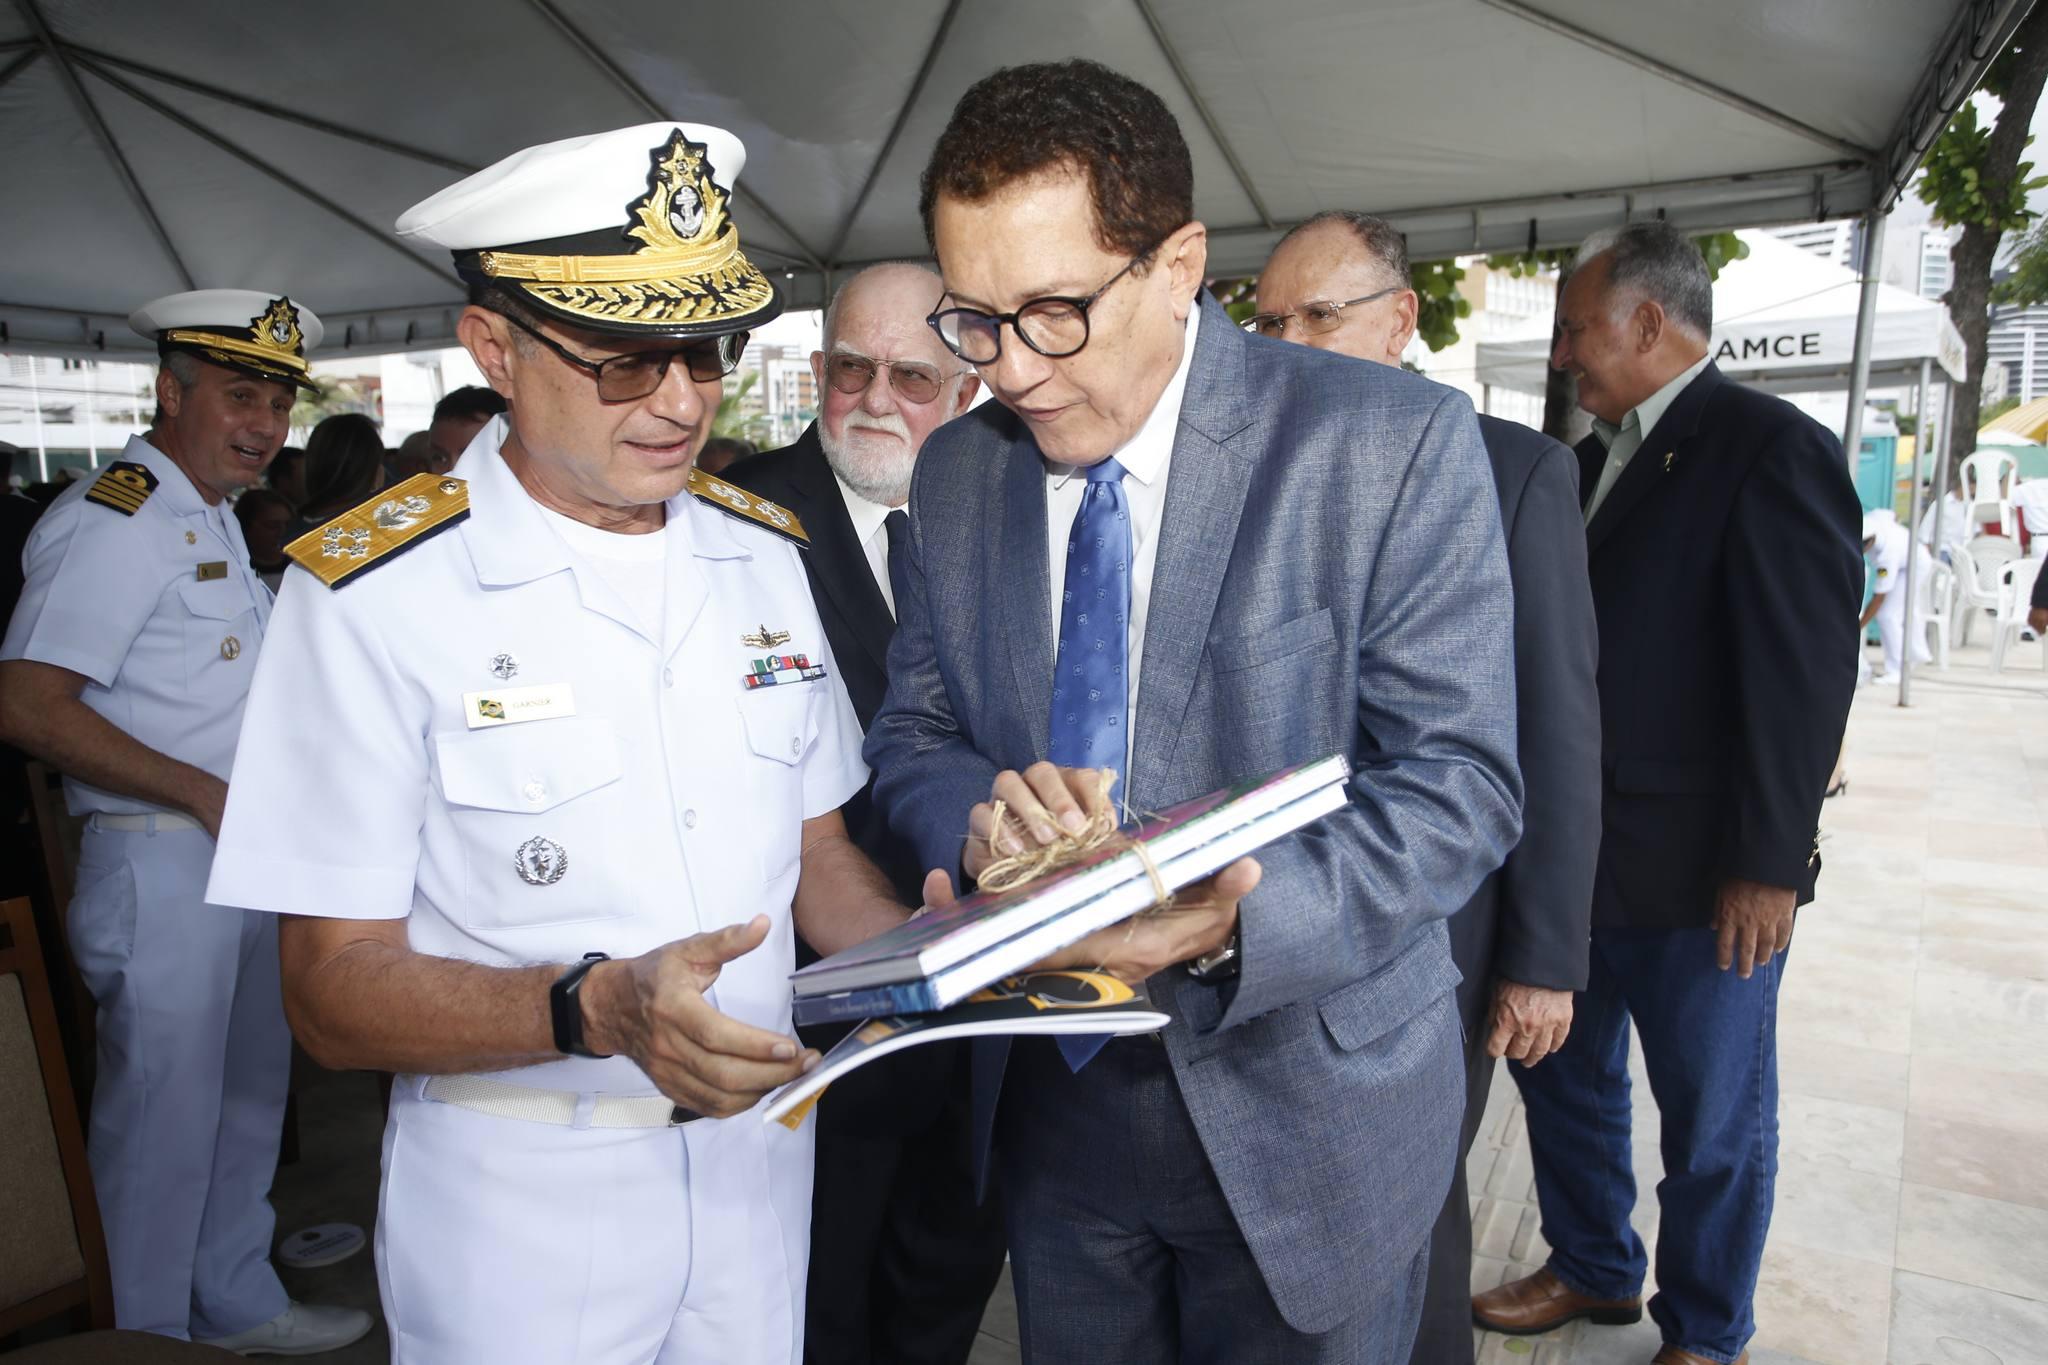 Almirante Almir Garnier Santos e Elpídio Nogueira